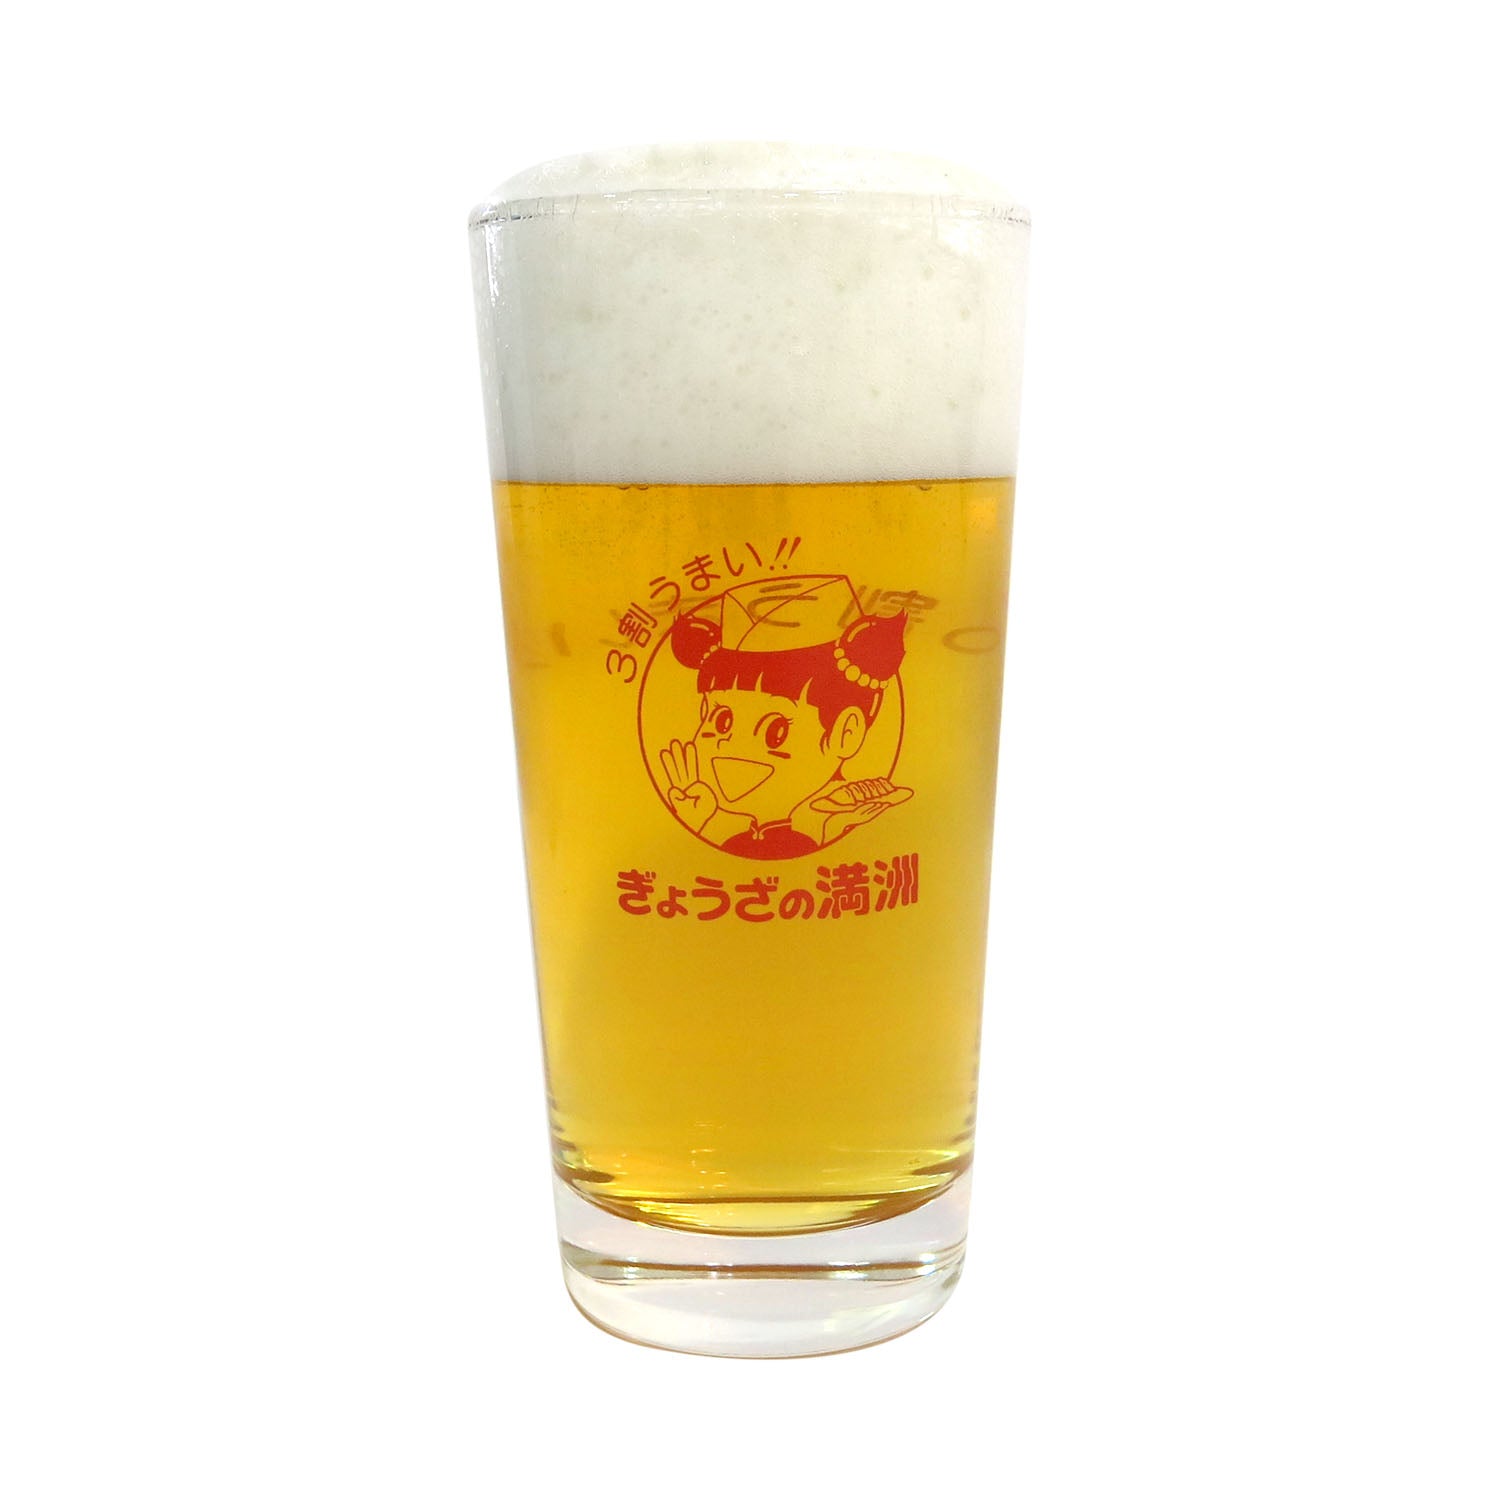 Gyoza Manchuria Beer Glass